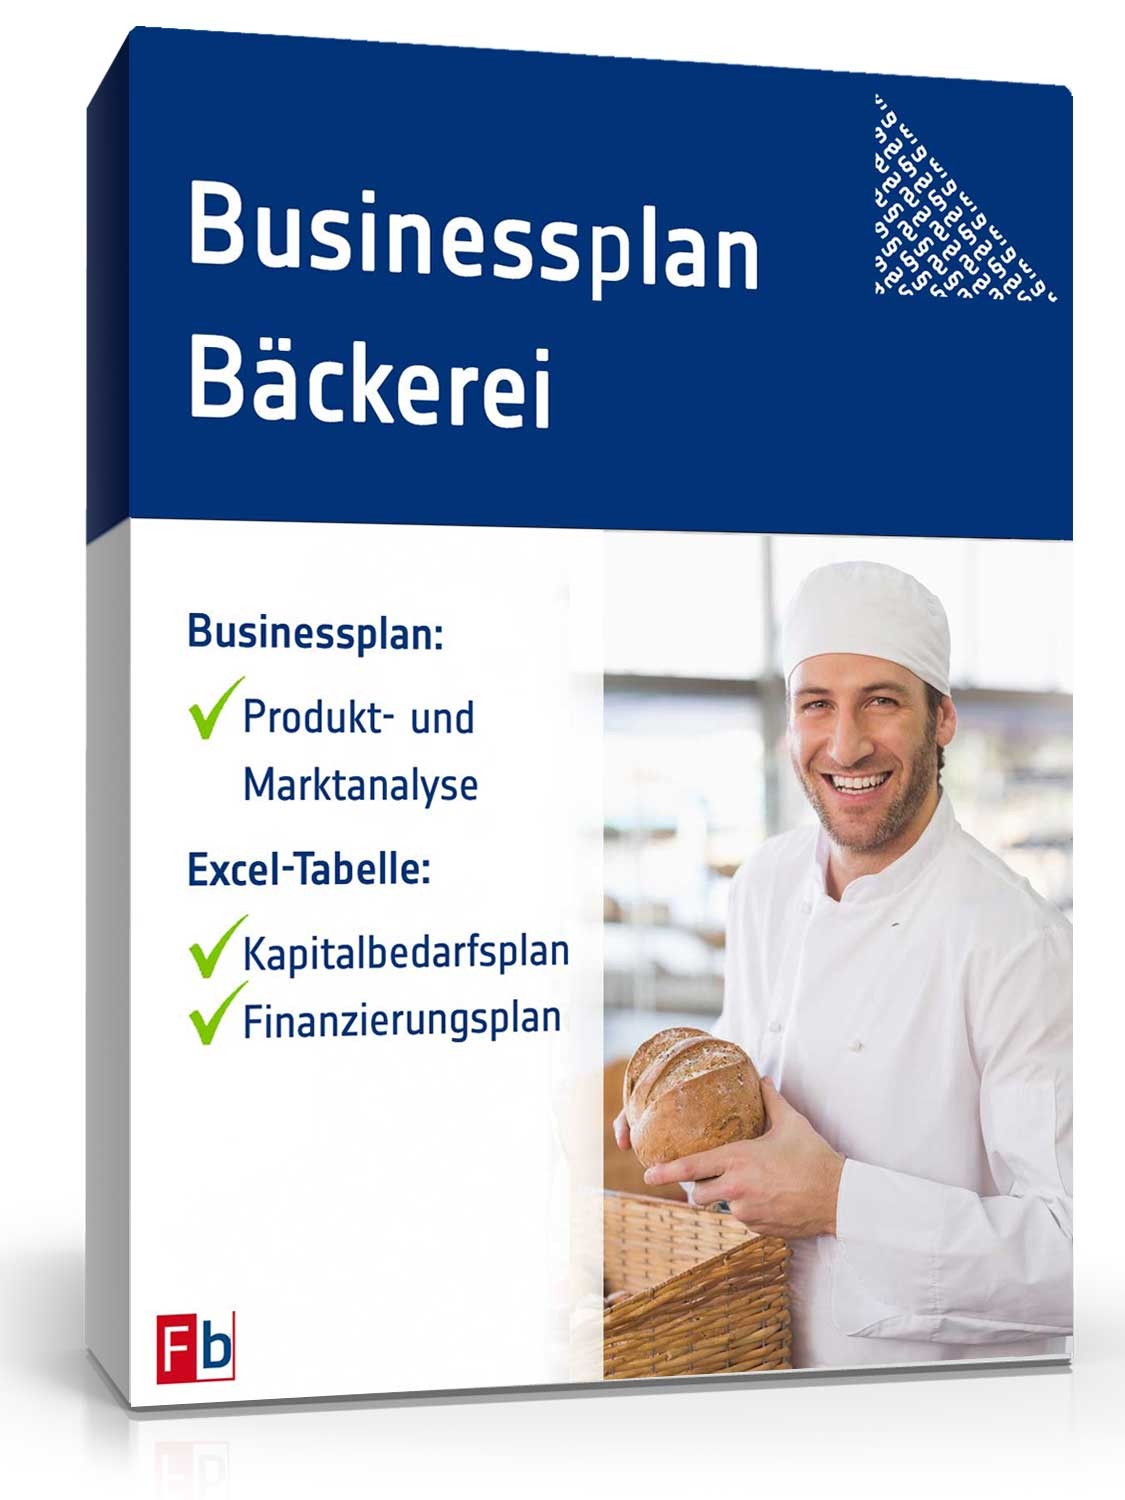 Hauptbild des Produkts: Businessplan Bäckerei 